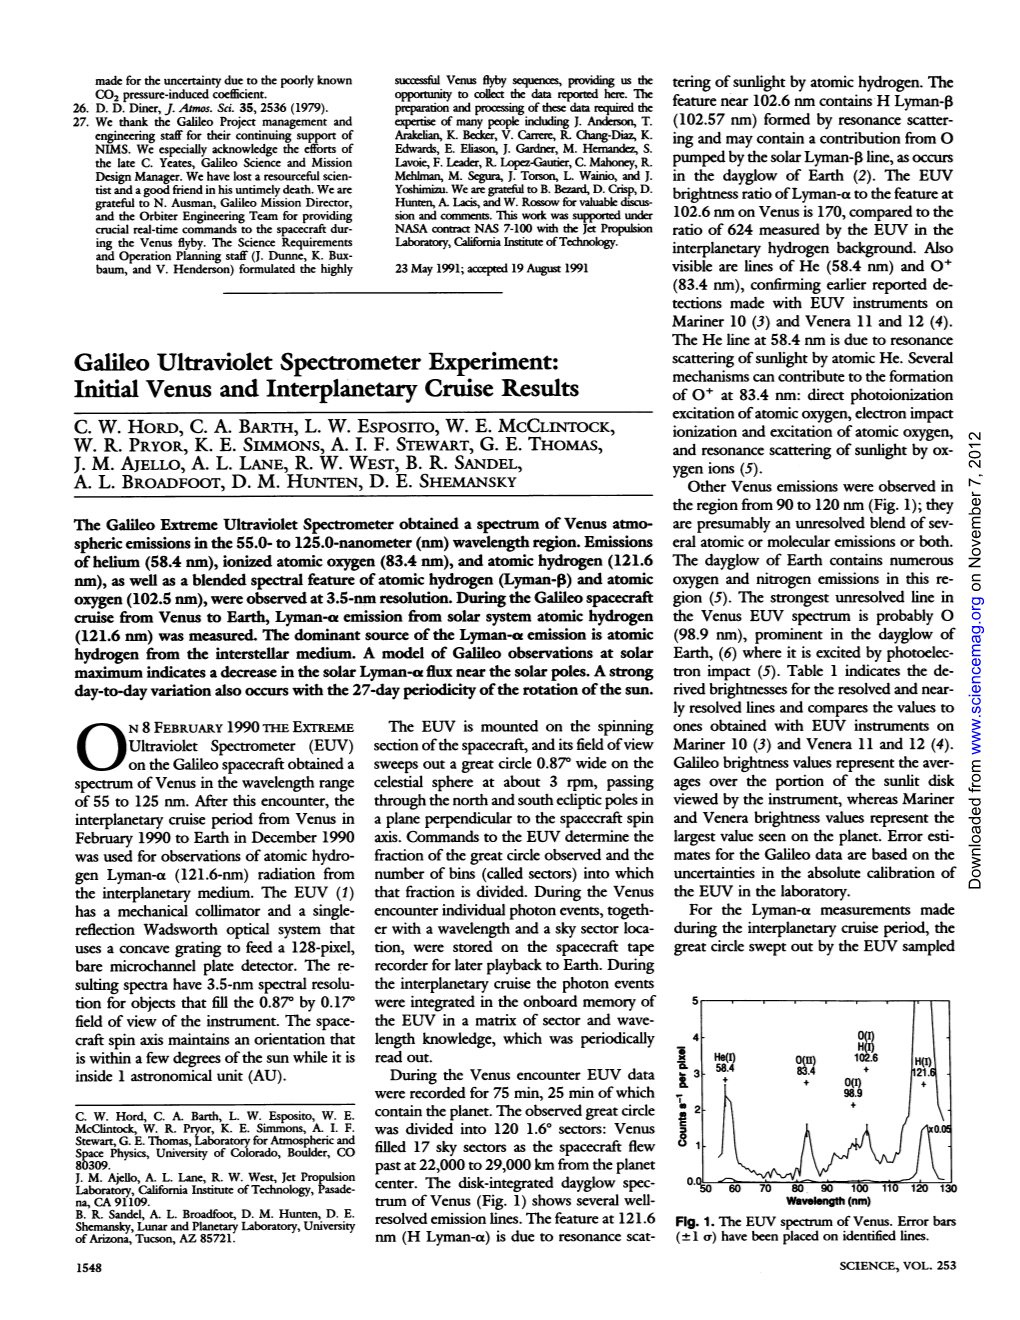 Galileo Ultraviolet Spectrometer Experiment: Initial Venus And